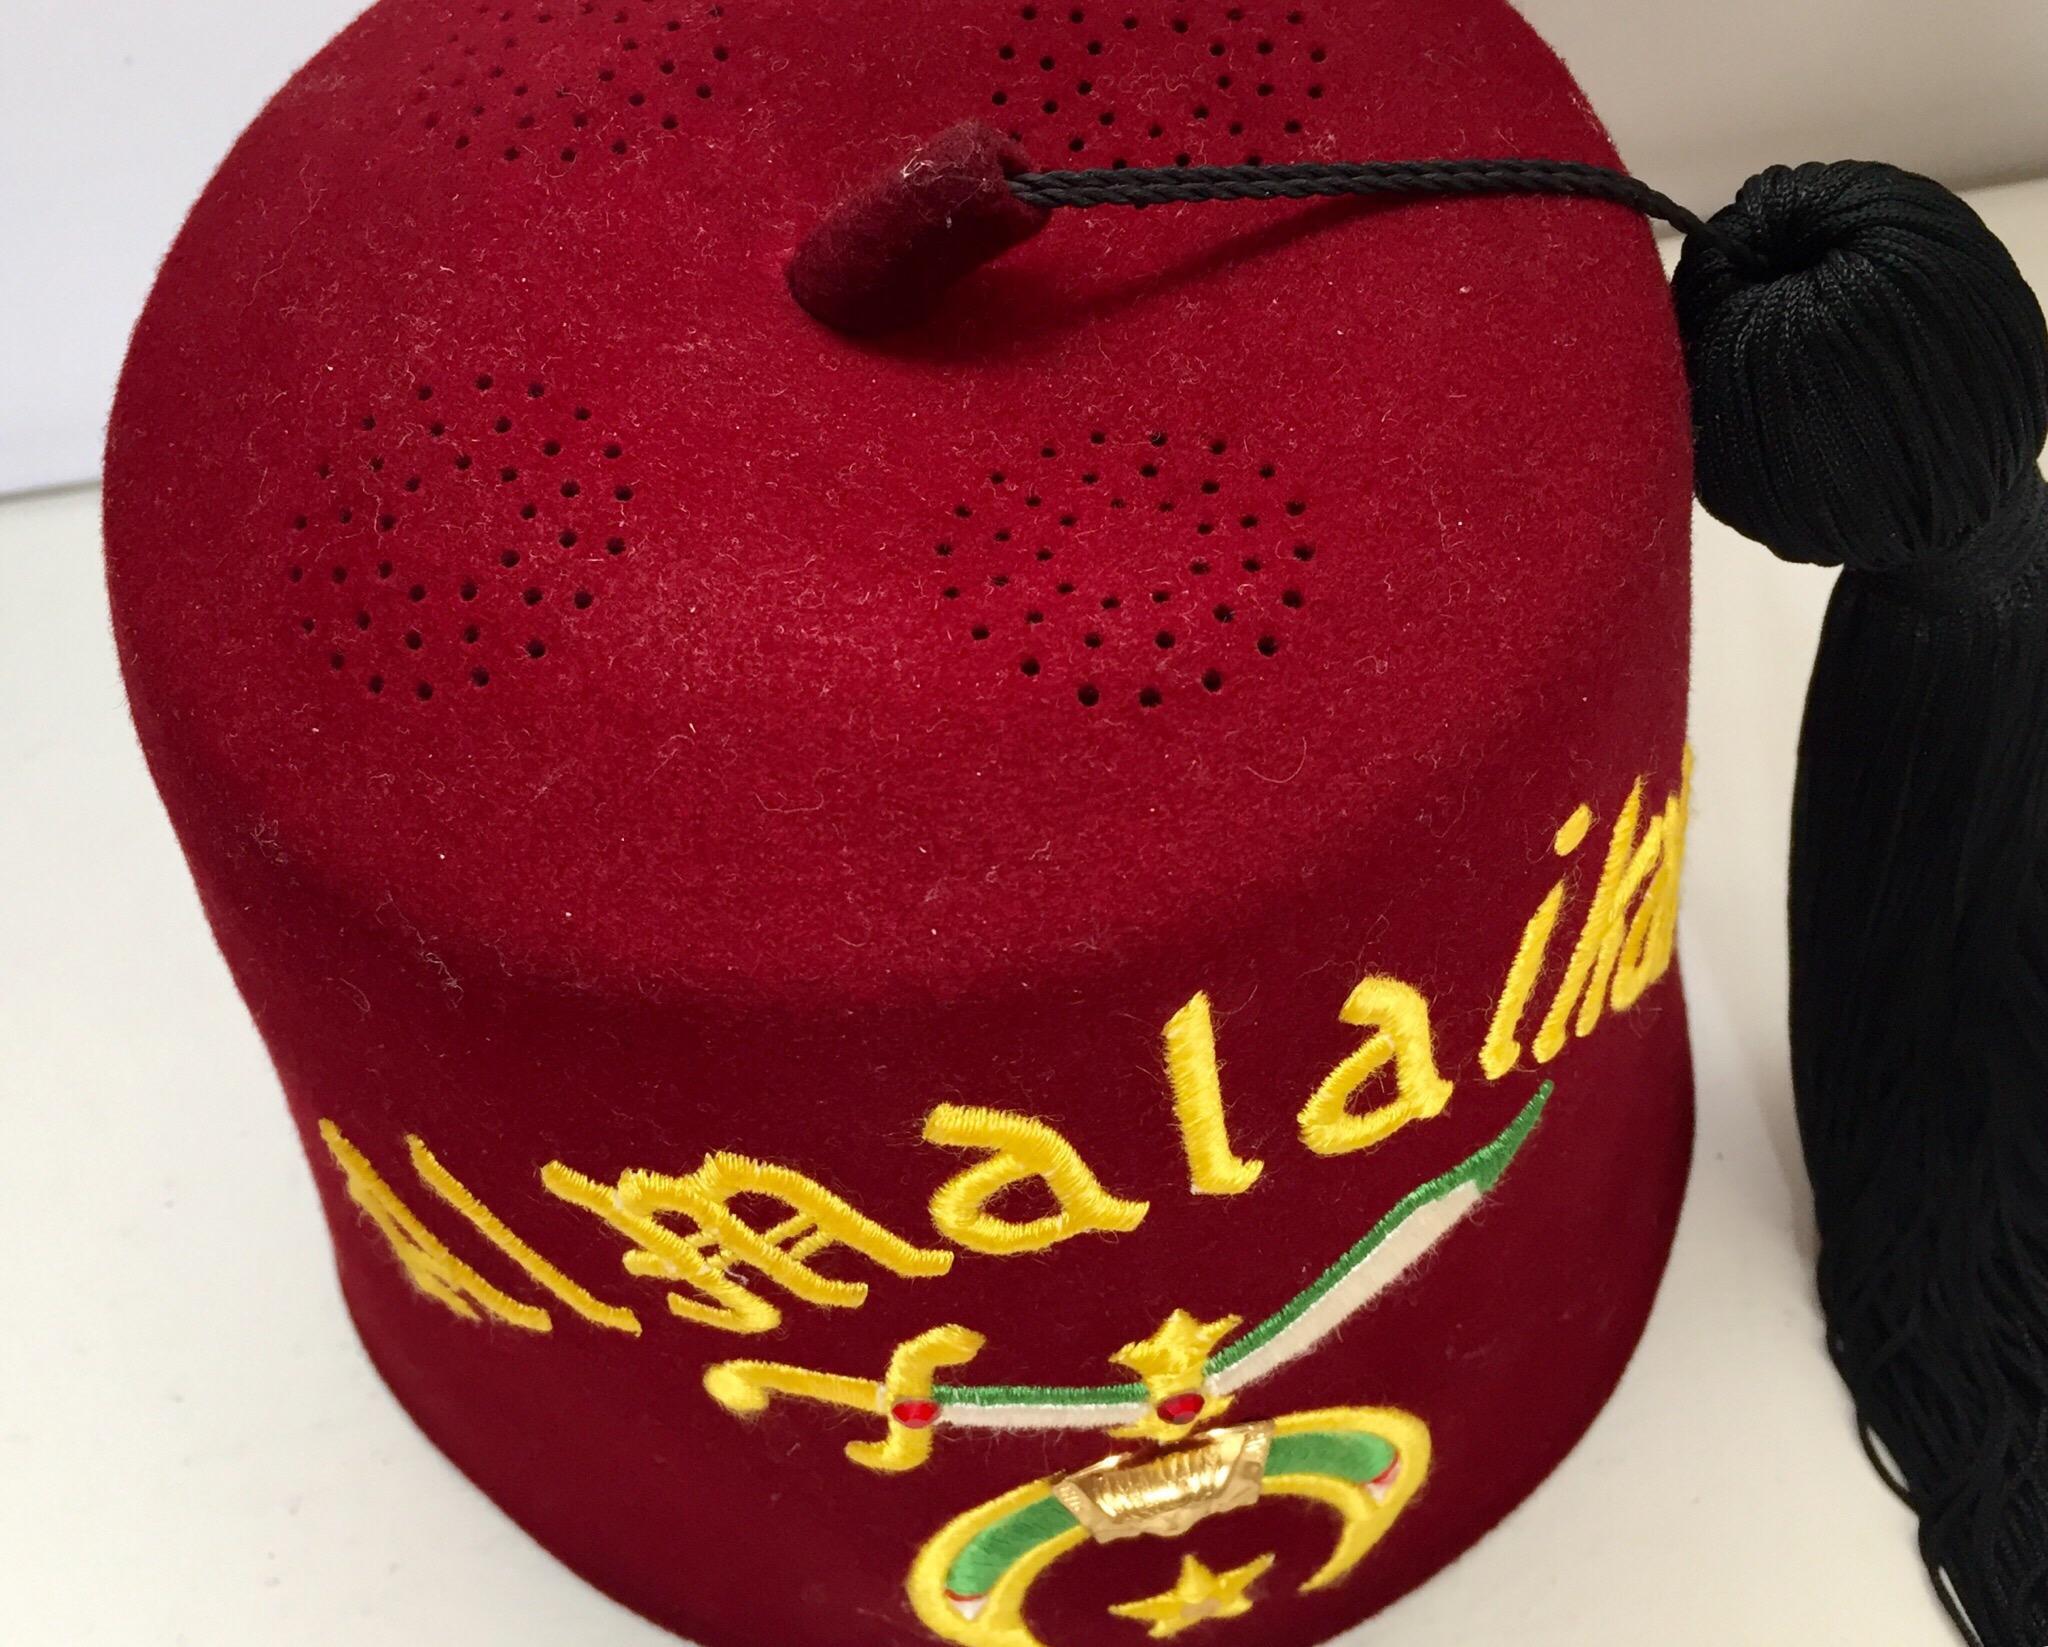 Black AL Malaikah Vintage Iconic Masonic Shriner Burgundy Wool Fez Hat in Original Box For Sale